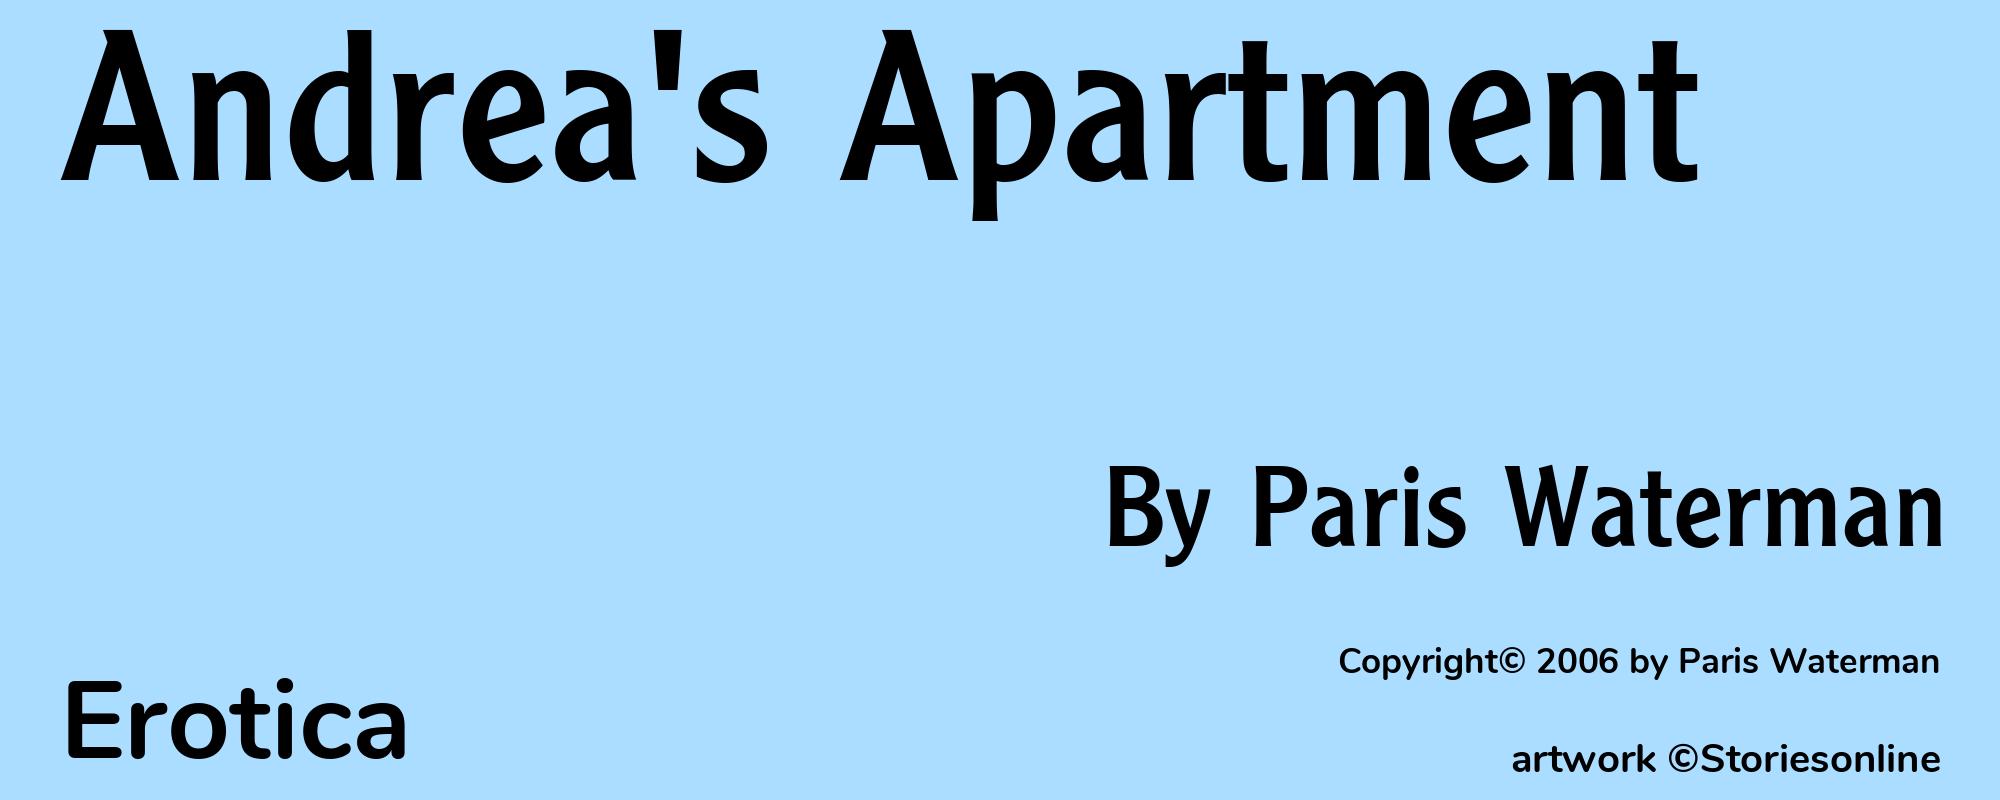 Andrea's Apartment - Cover